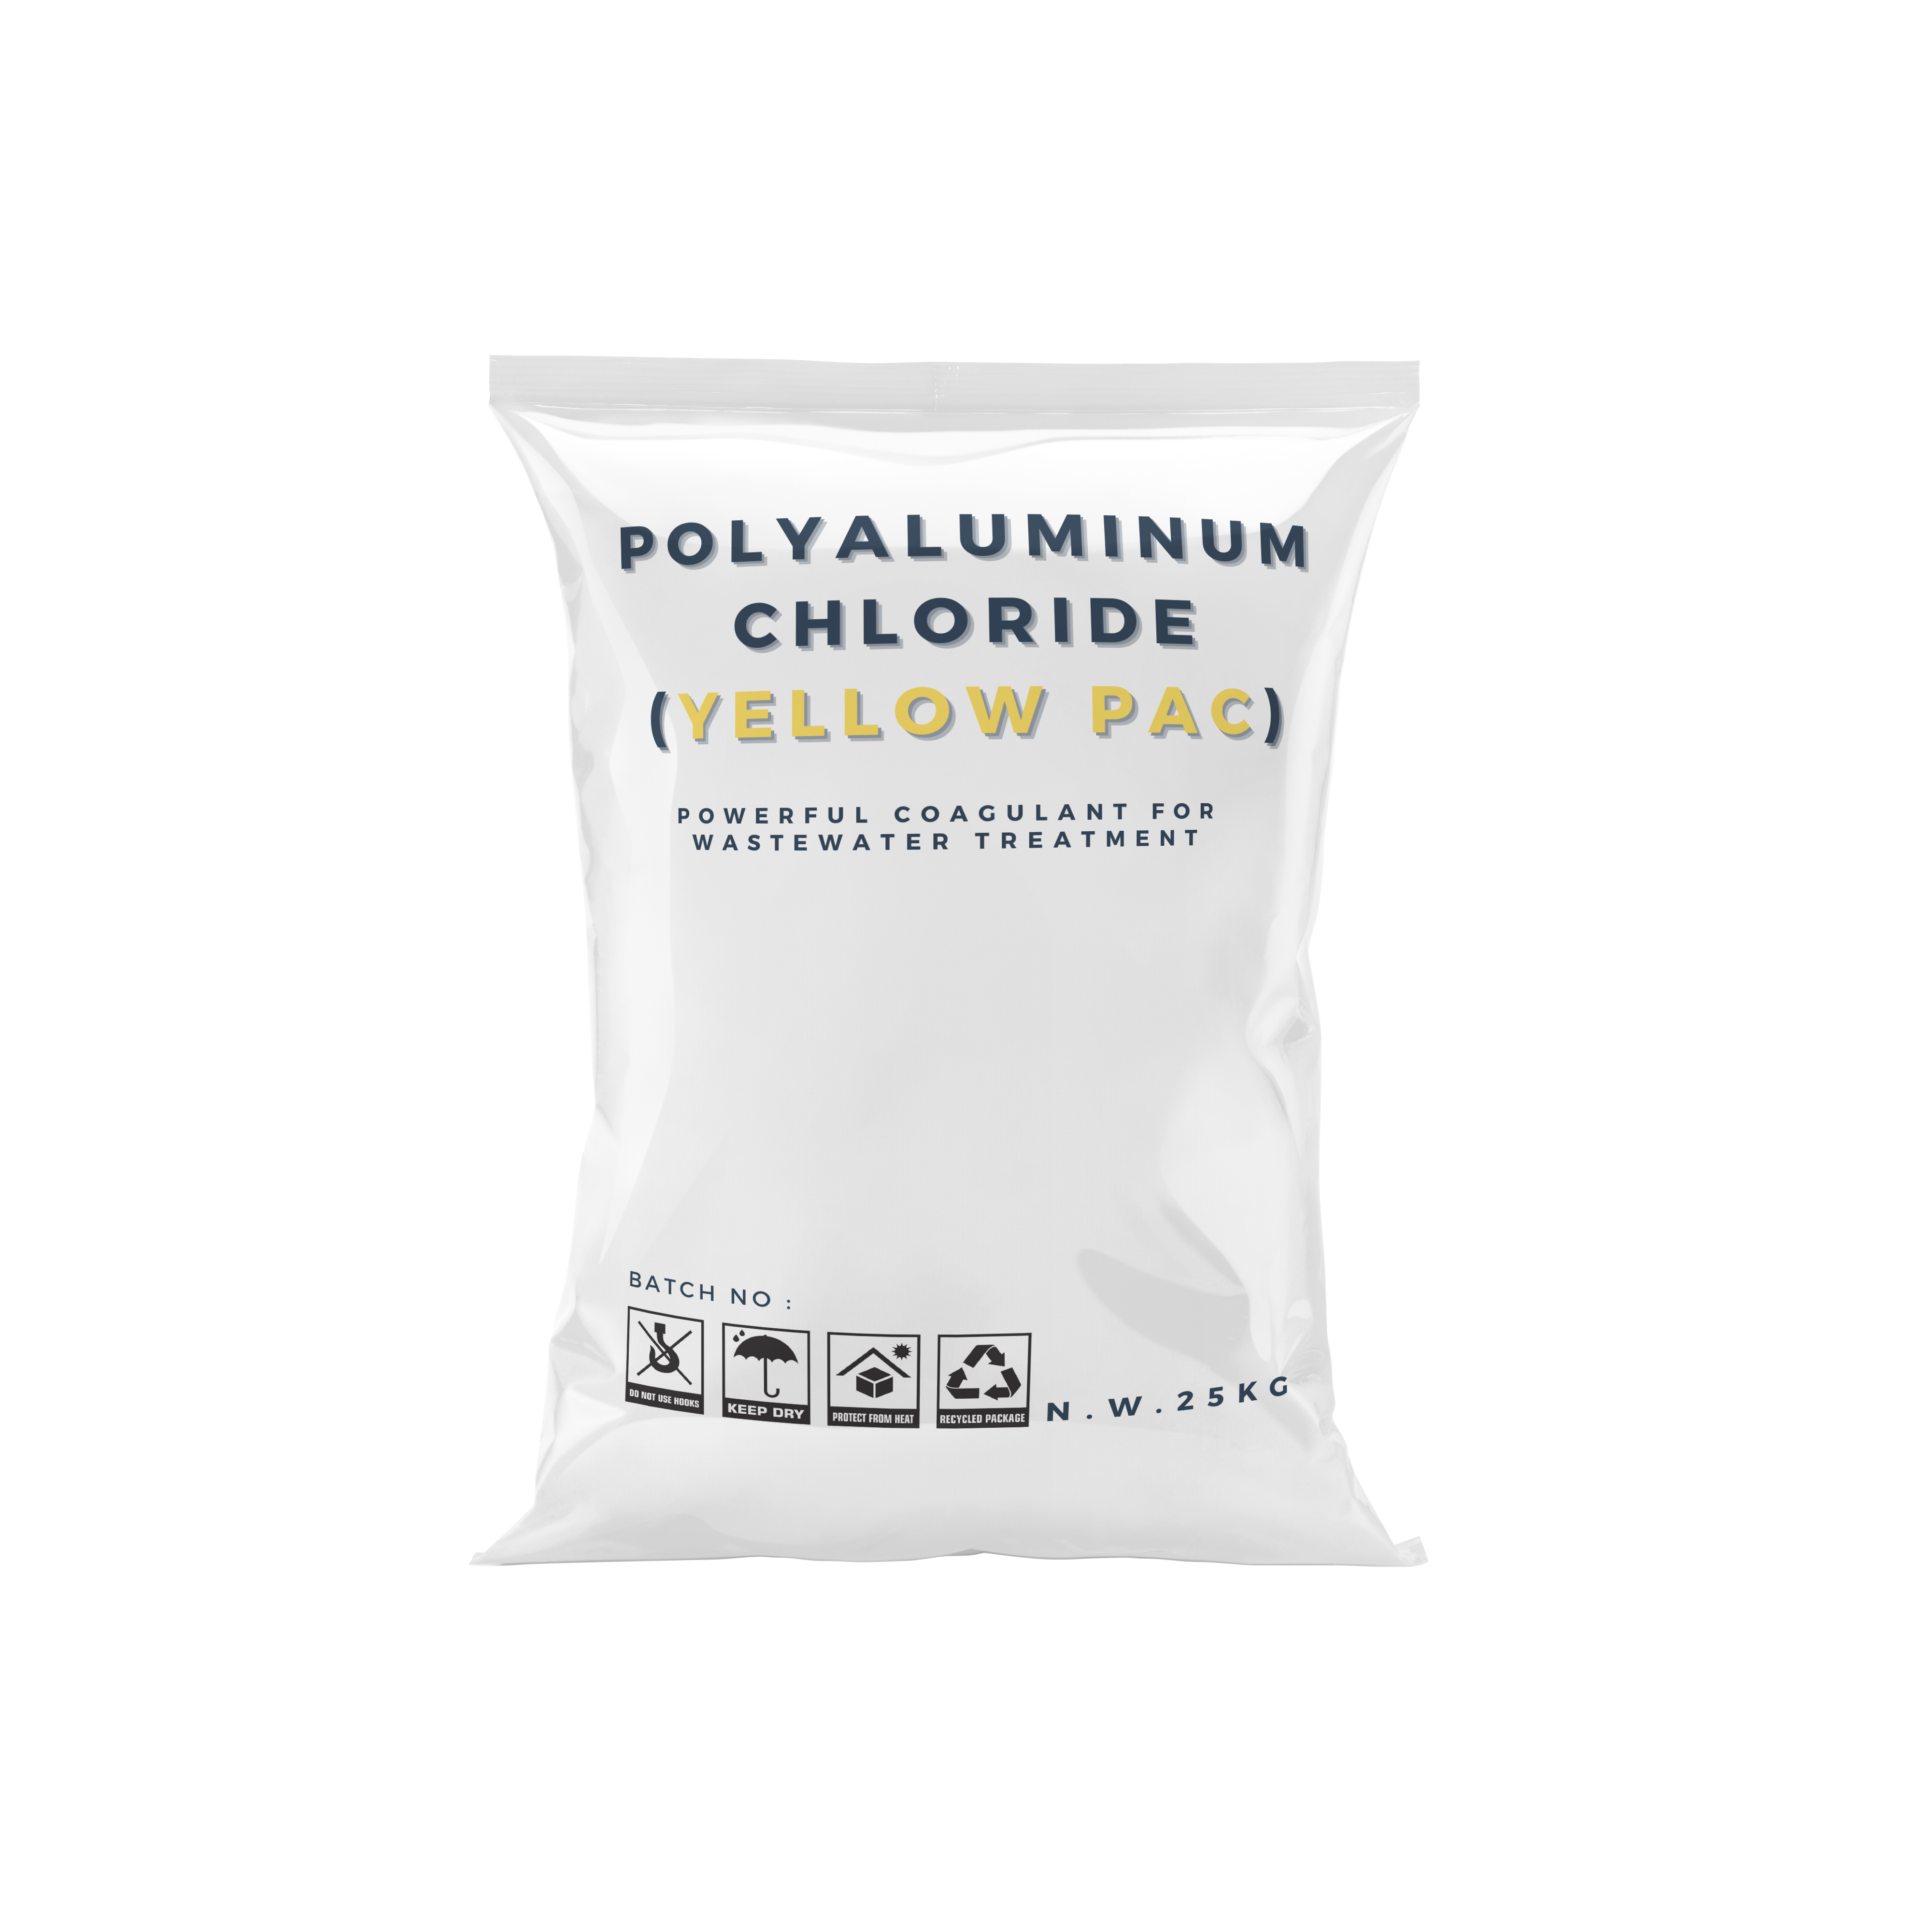 Poly aluminum chloride (YELLOW PAC) 